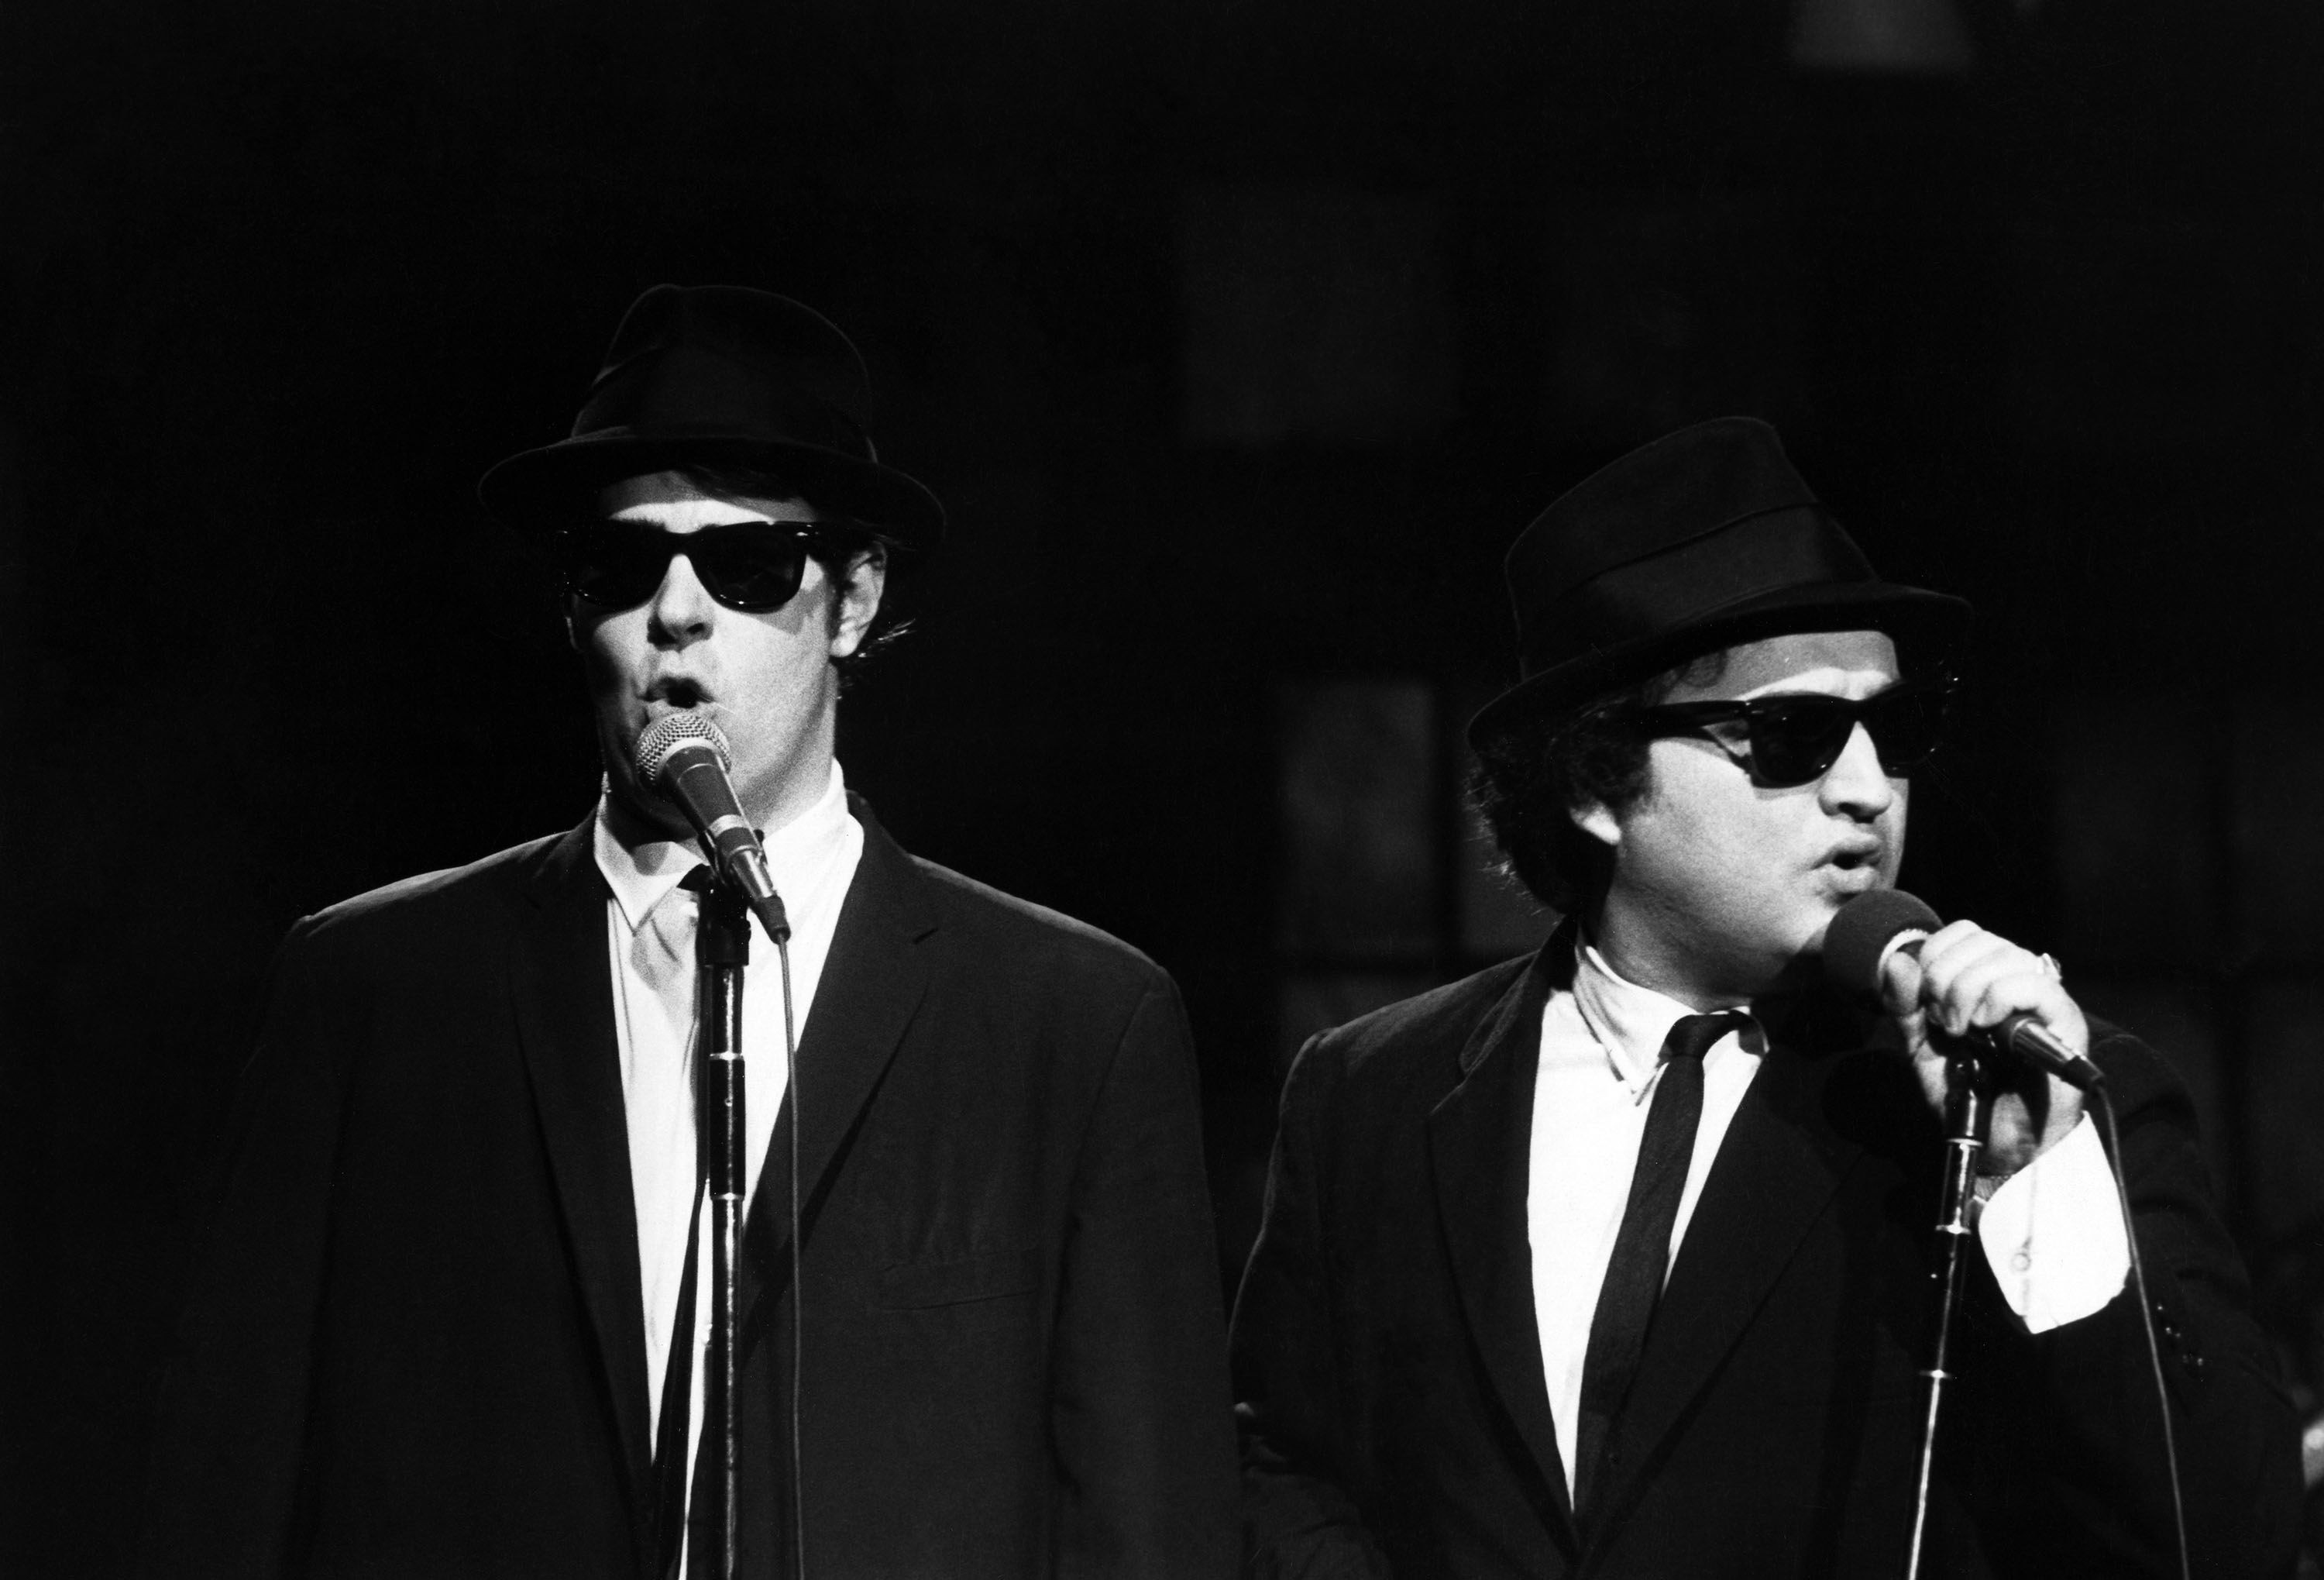 Dan Aykroyd and John Belushi as the Blues Brothers on Saturday Night Live.